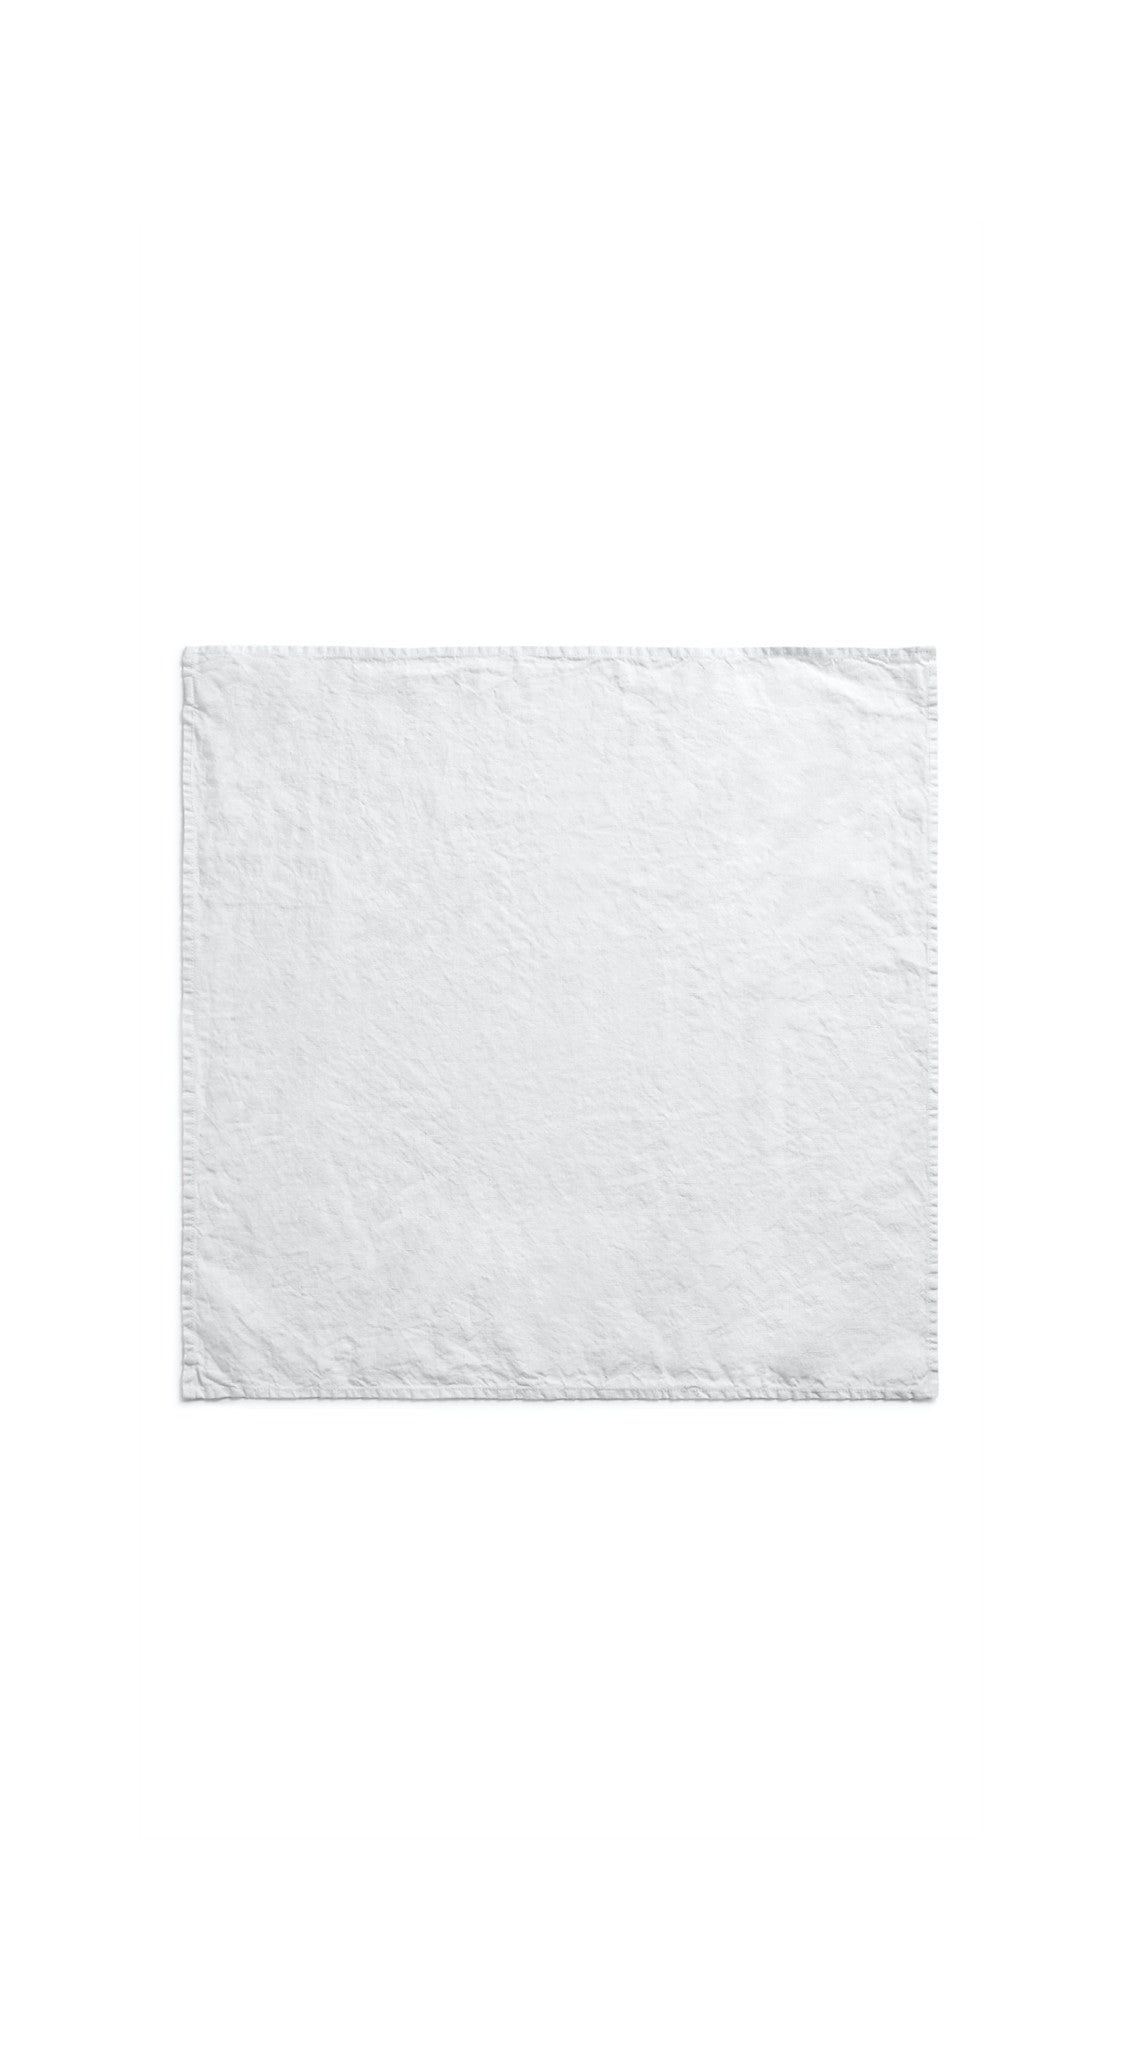 Plain Linen Napkin in White, 50x50cm